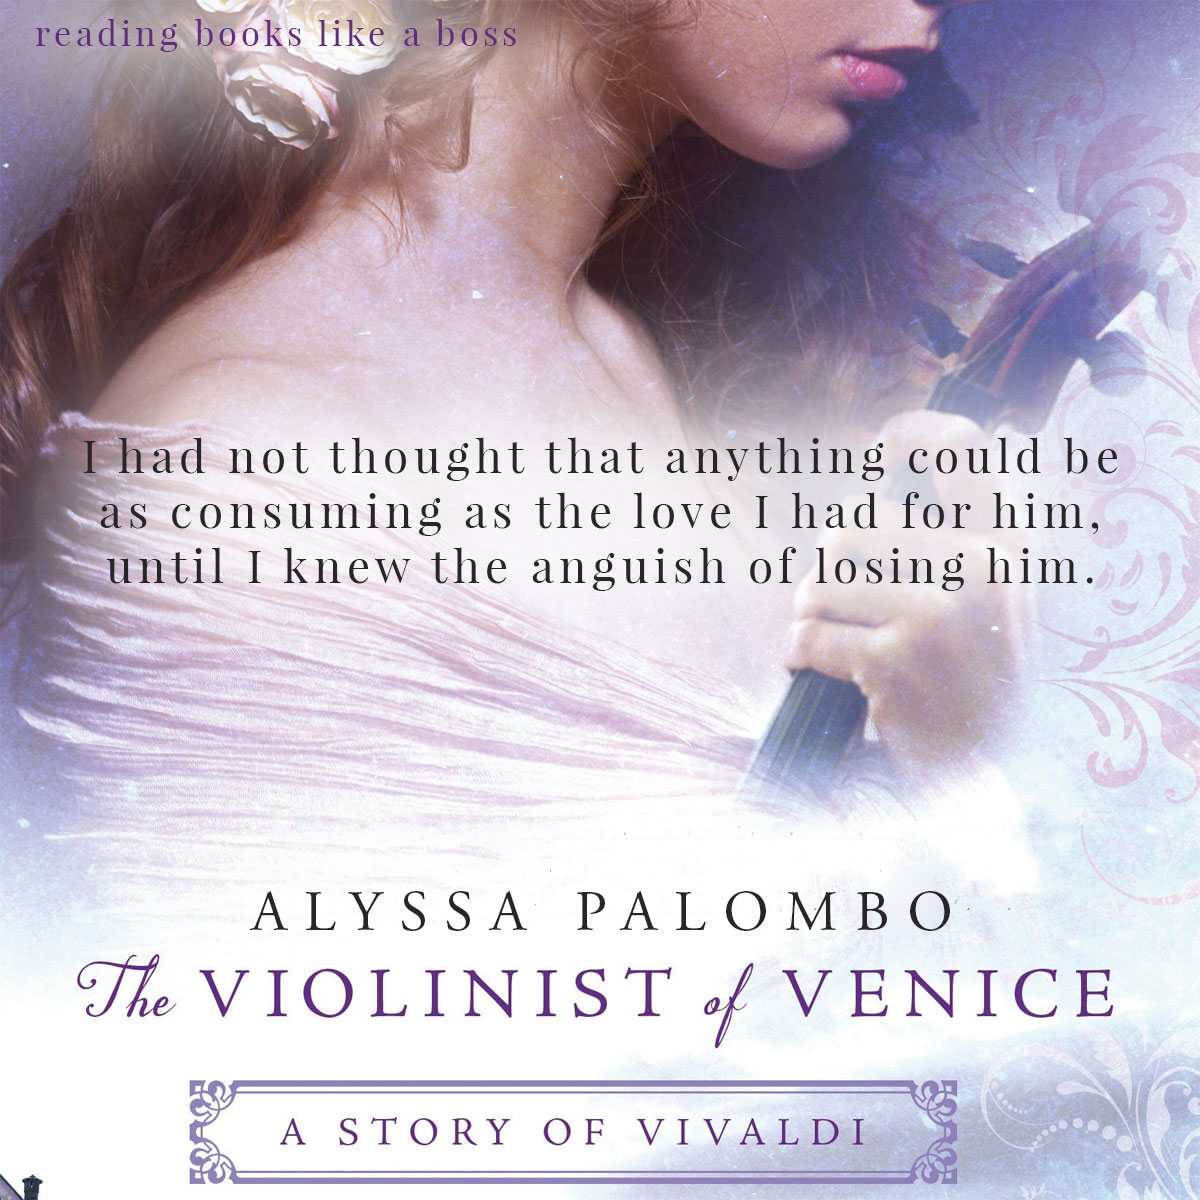 The Violinist of Venice by Alyssa Palombo